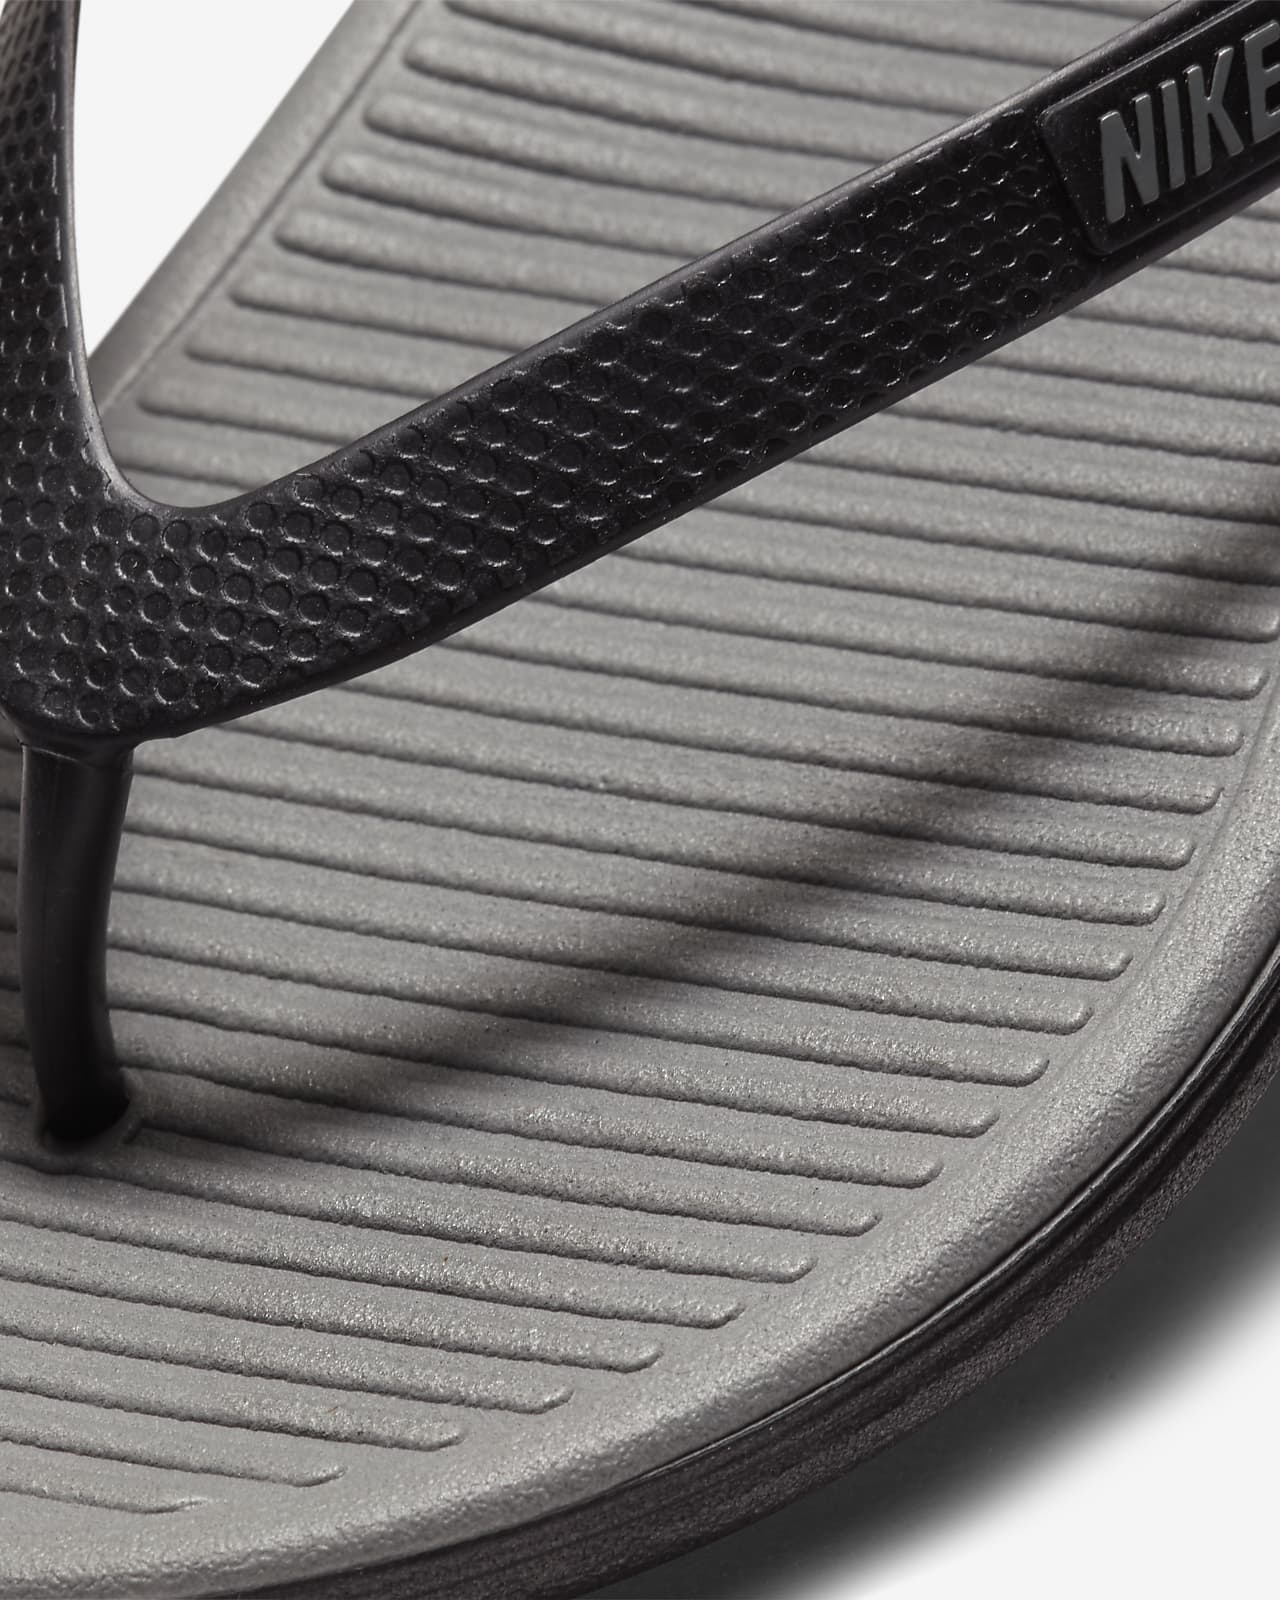 gray nike flip flops